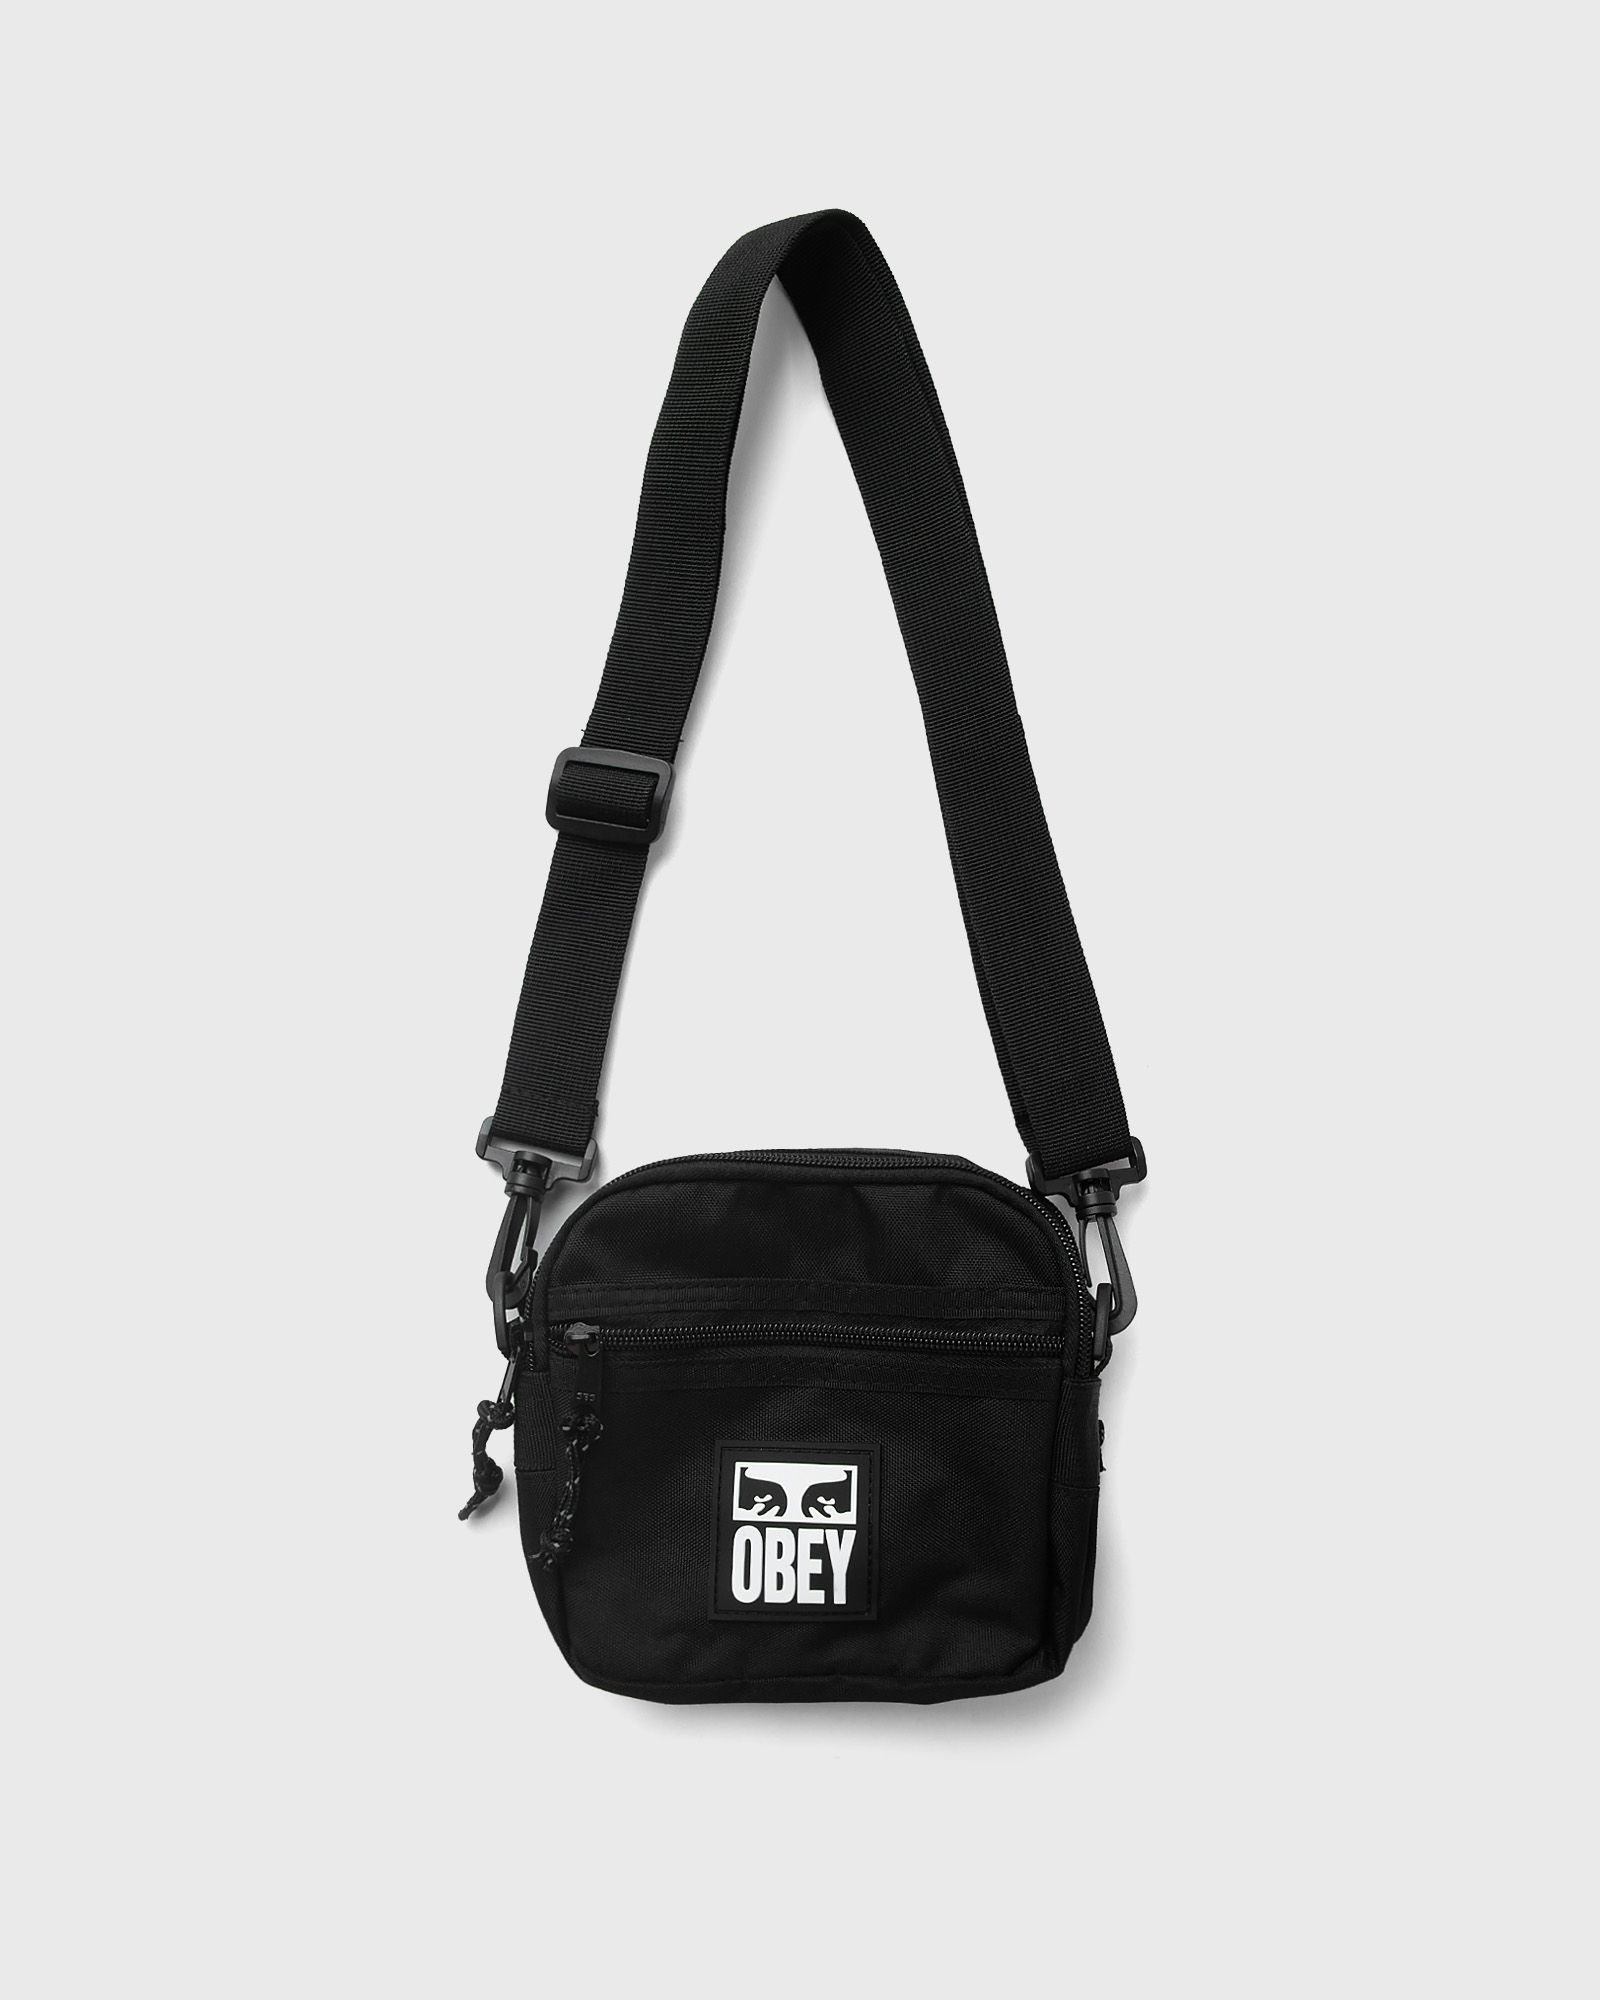 Obey - small messenger bag men messenger & crossbody bags black in größe:one size